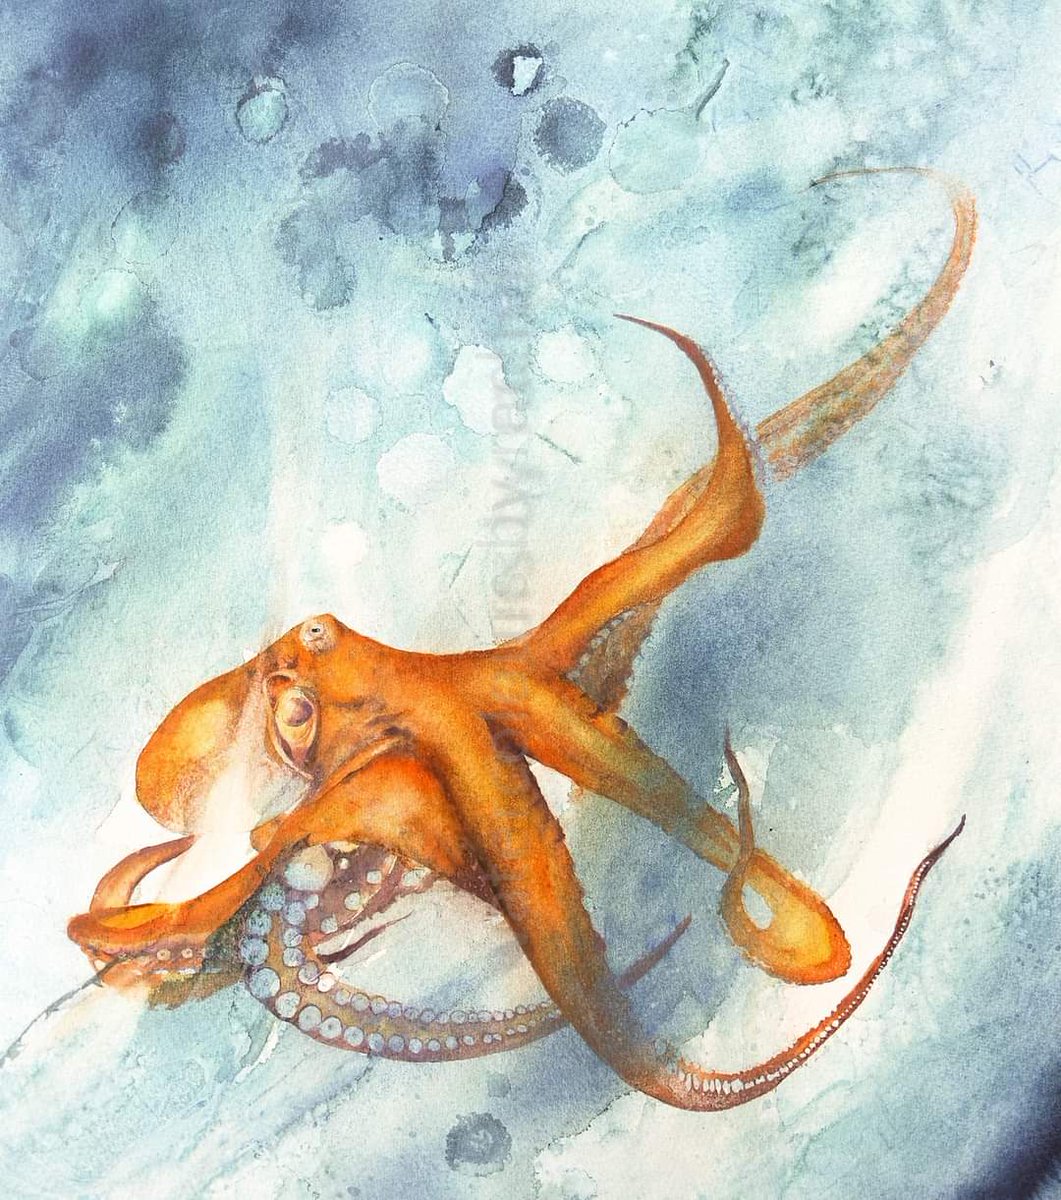 Under the sea x Happy Friday x #watercolour #octopus #watercolourpainting #ocean #movement #water #sea #wildlife #wildlifeart #tentacles #underwater #painting #art #inspiration #paint #art